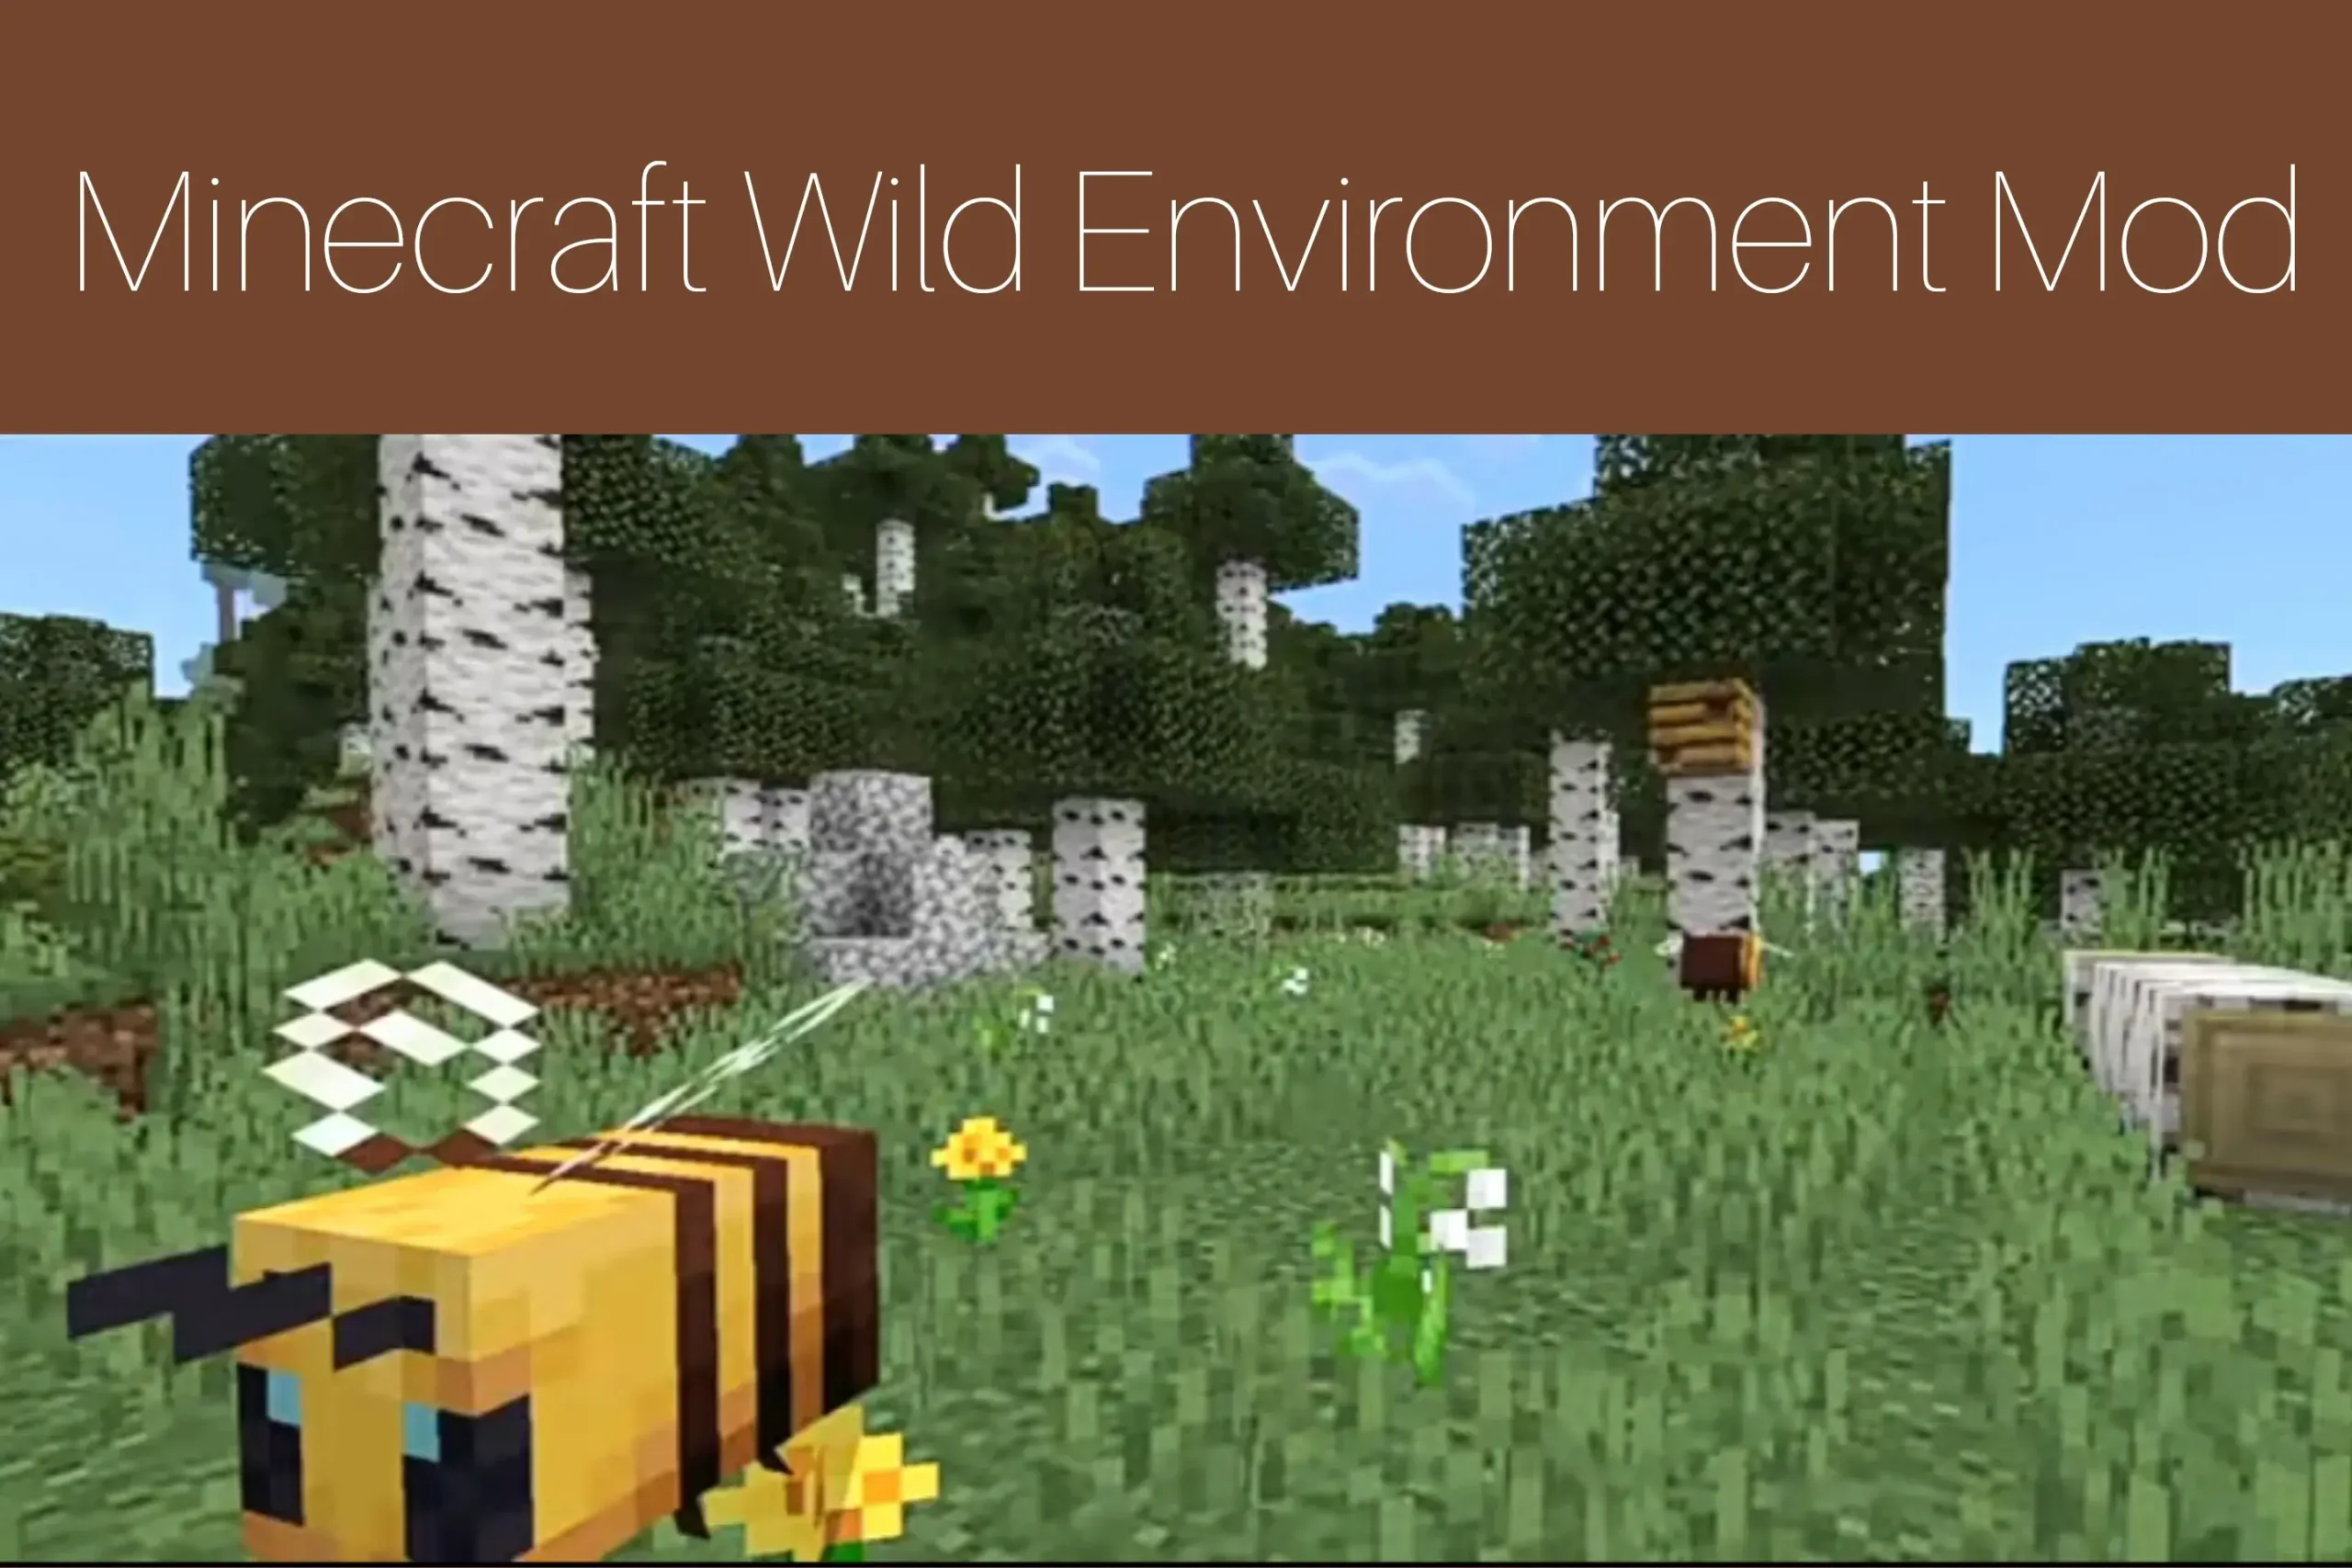 Minecraft Wild Environment Mod